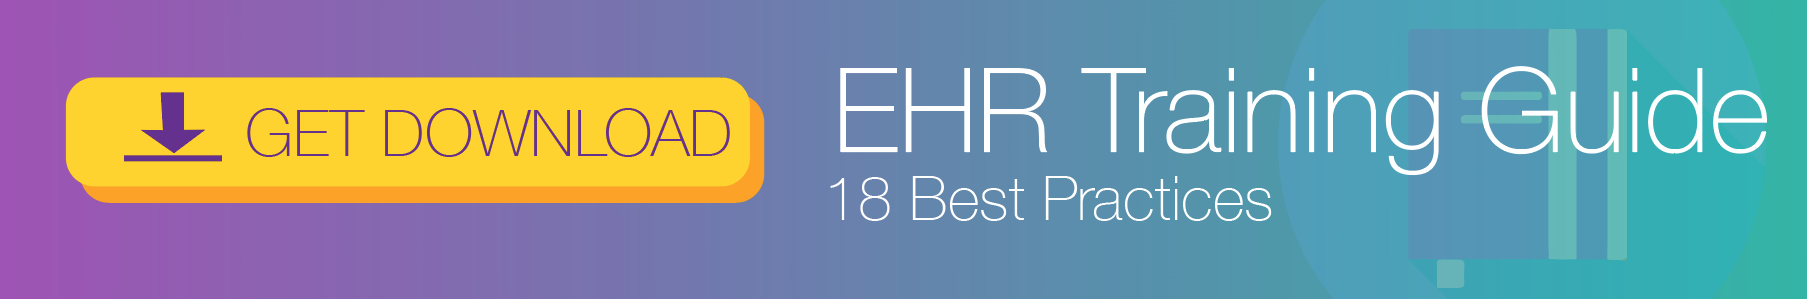 EHR Training Guide: Get Download